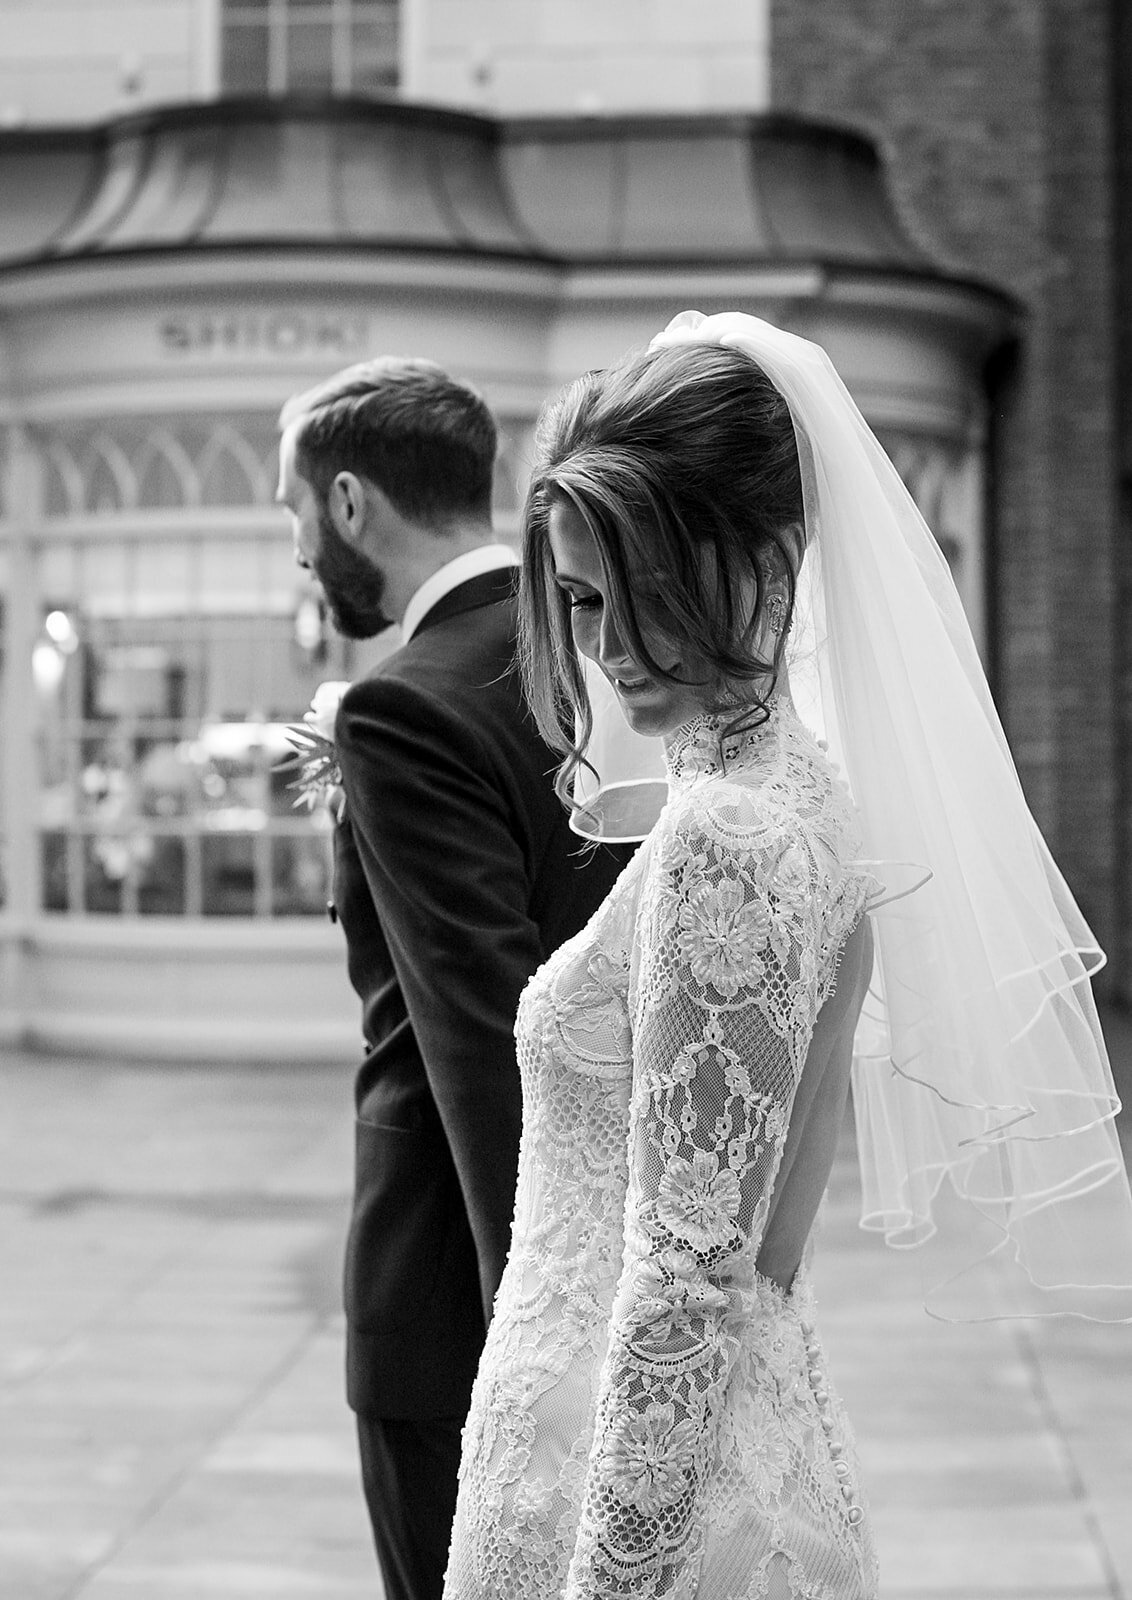 Bride walks through London with groom